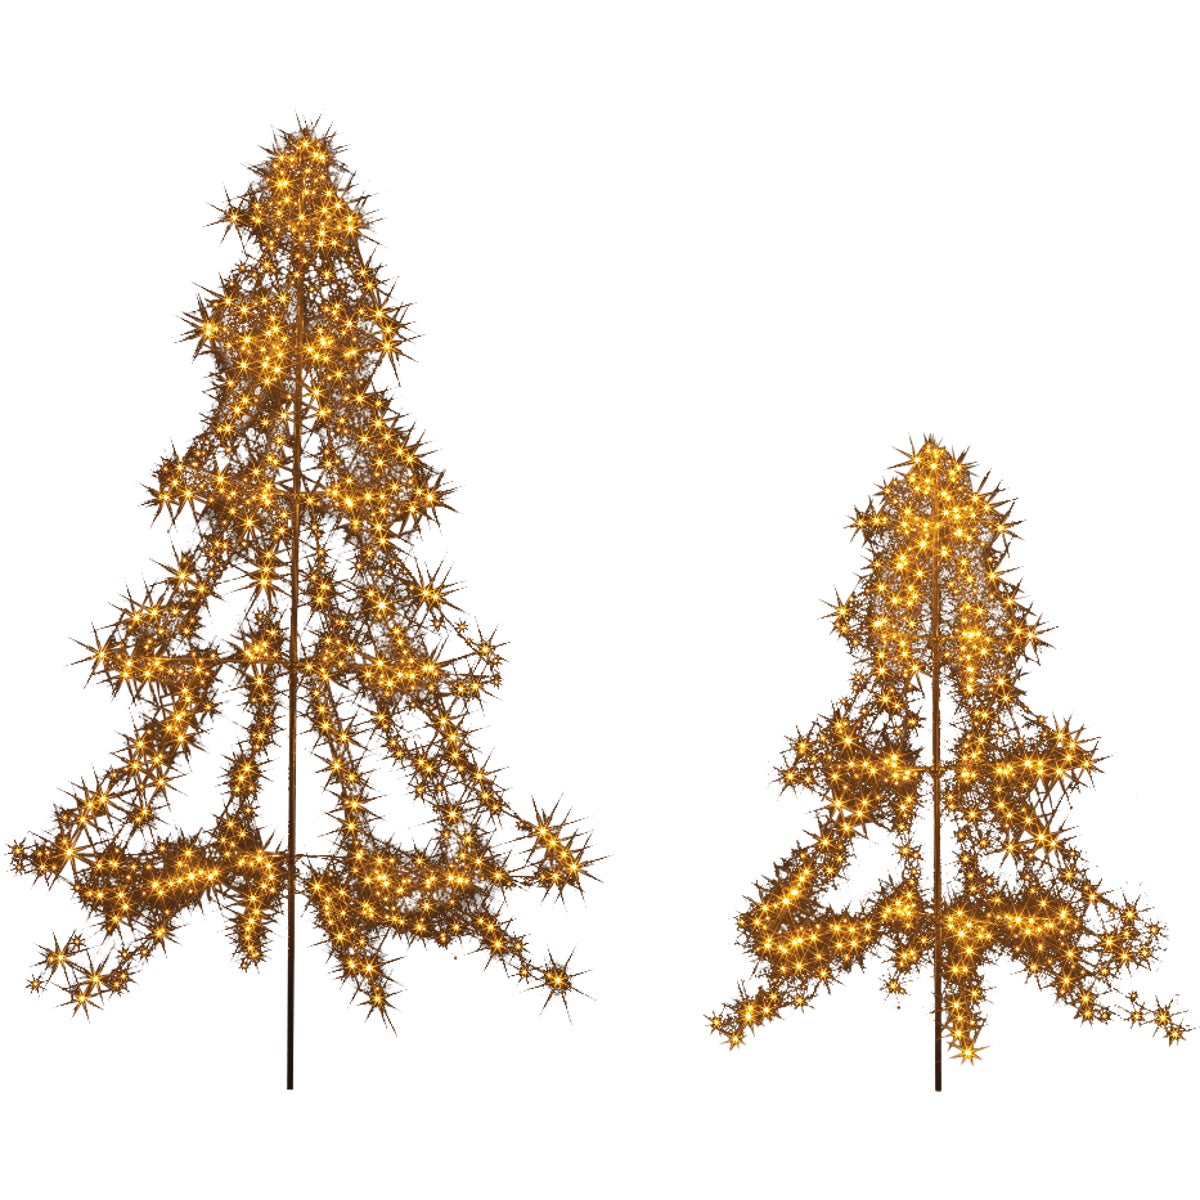 Item 939524, LED (light emitting diode) lighted 3-dimensional Christmas tree.